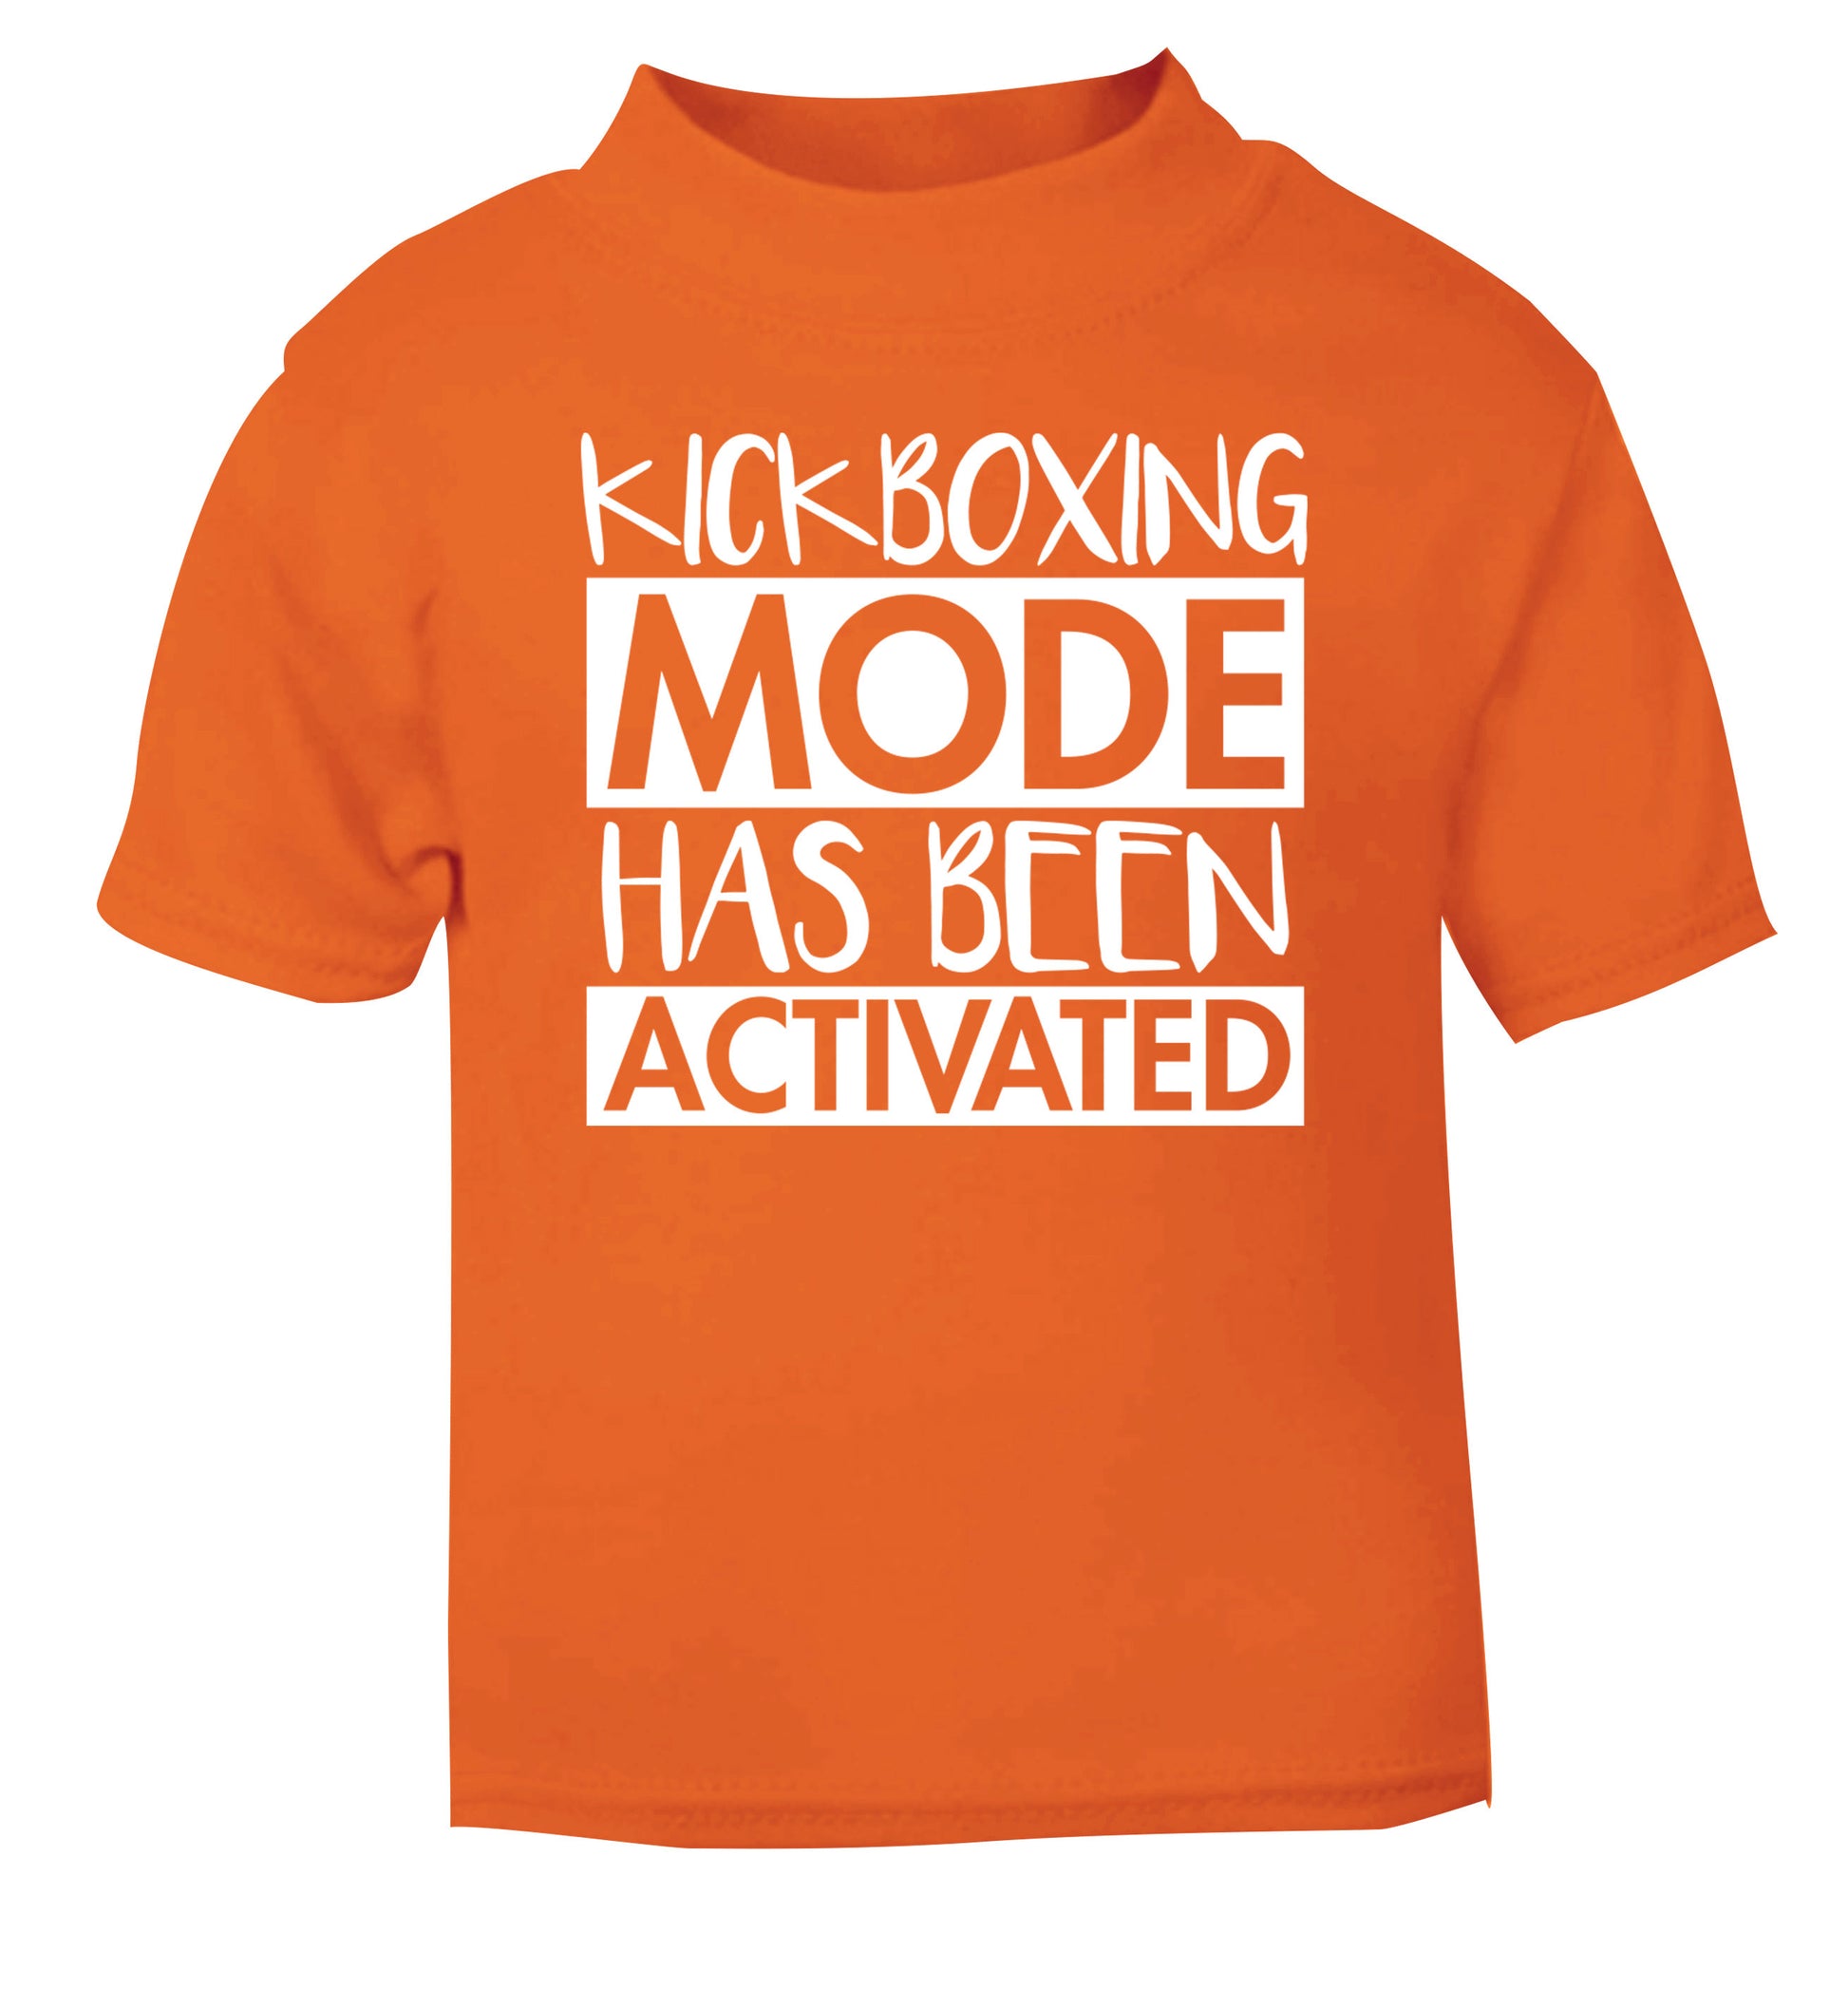 Kickboxing mode activated orange Baby Toddler Tshirt 2 Years